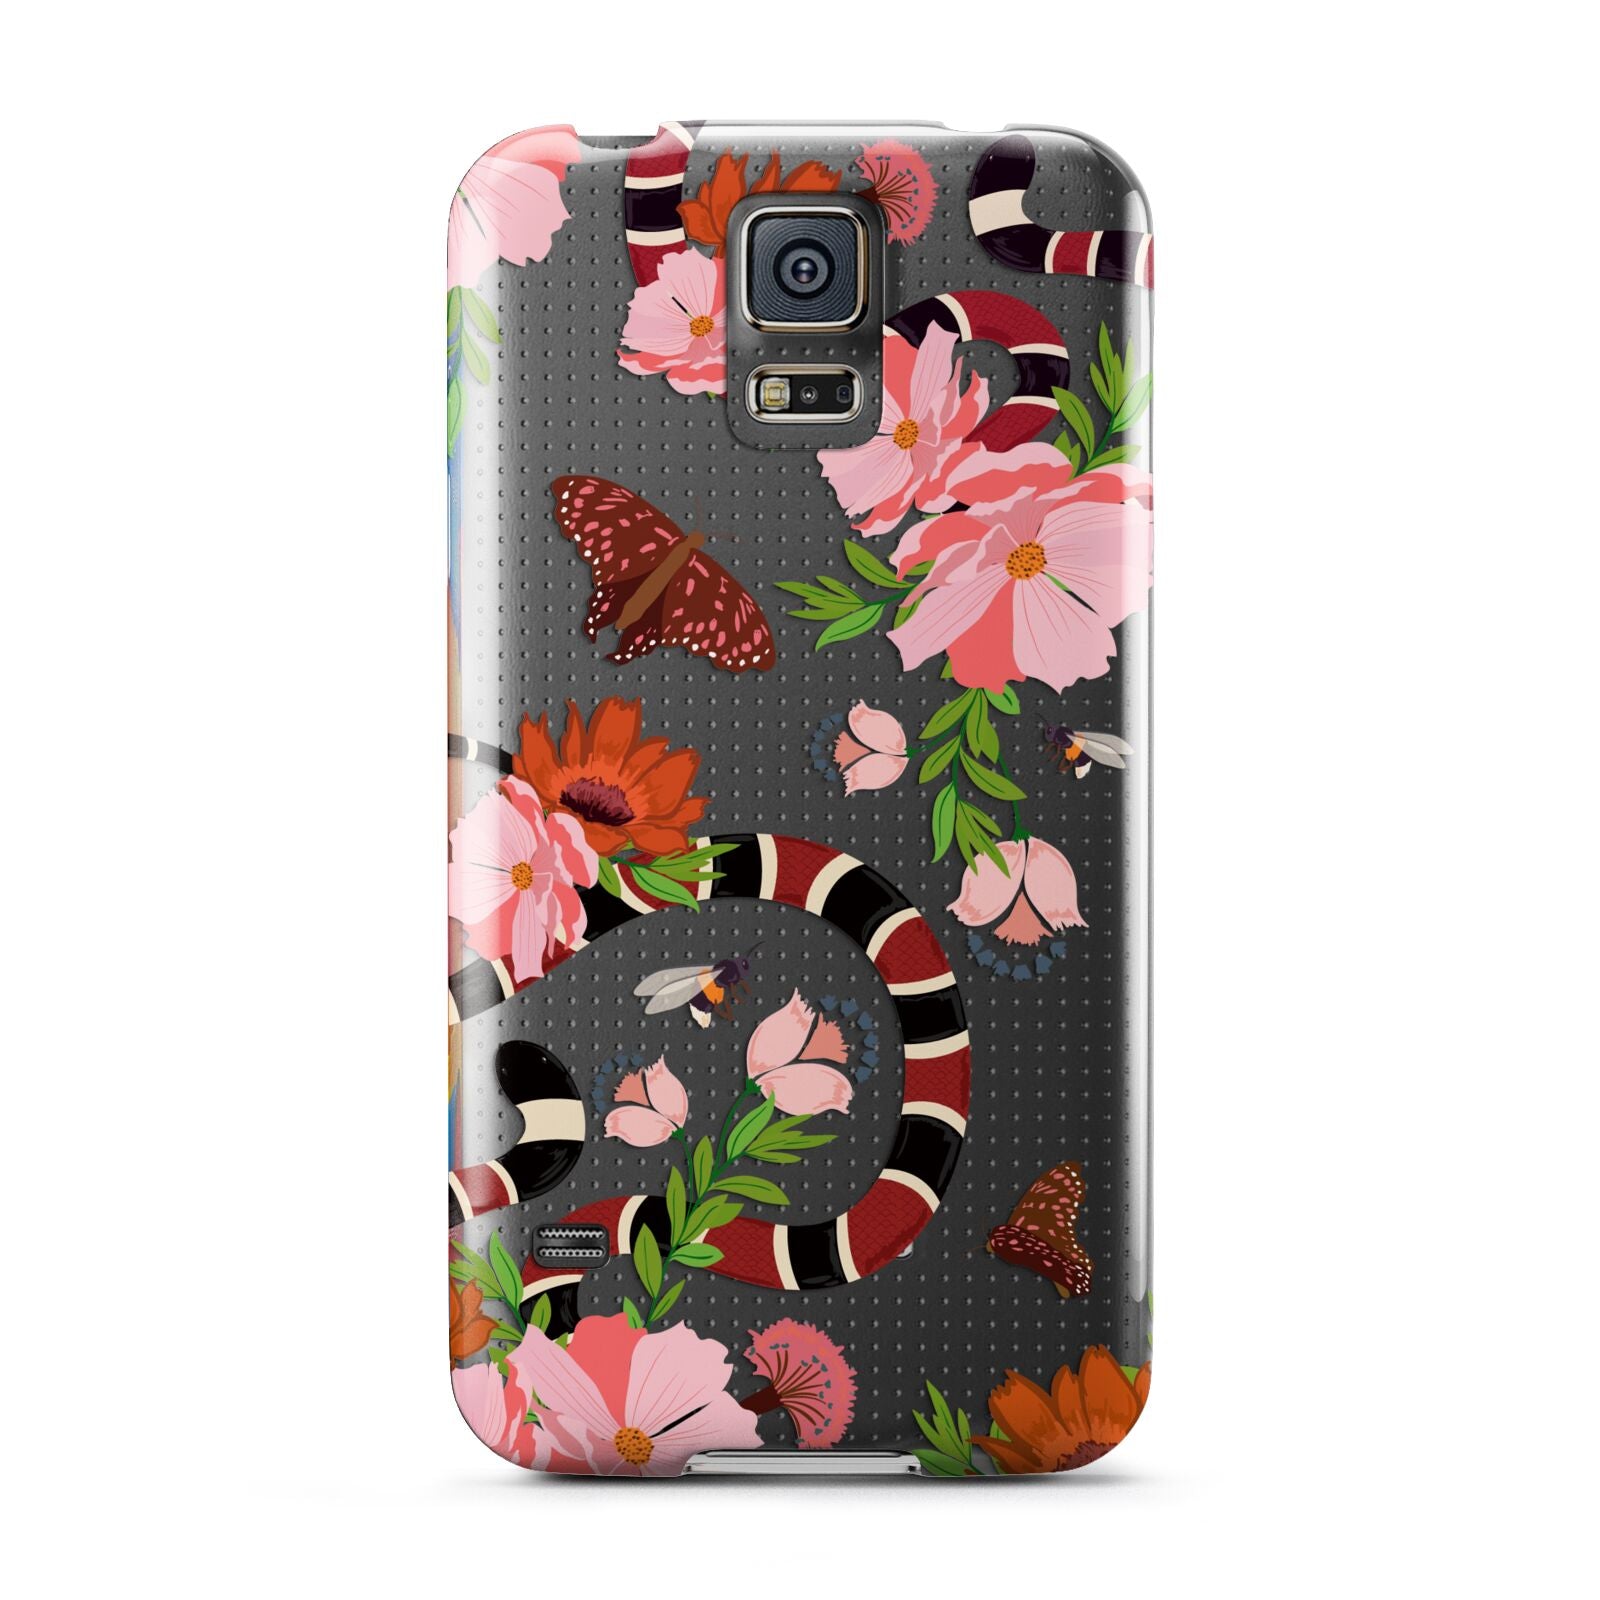 Floral Snake Samsung Galaxy S5 Case